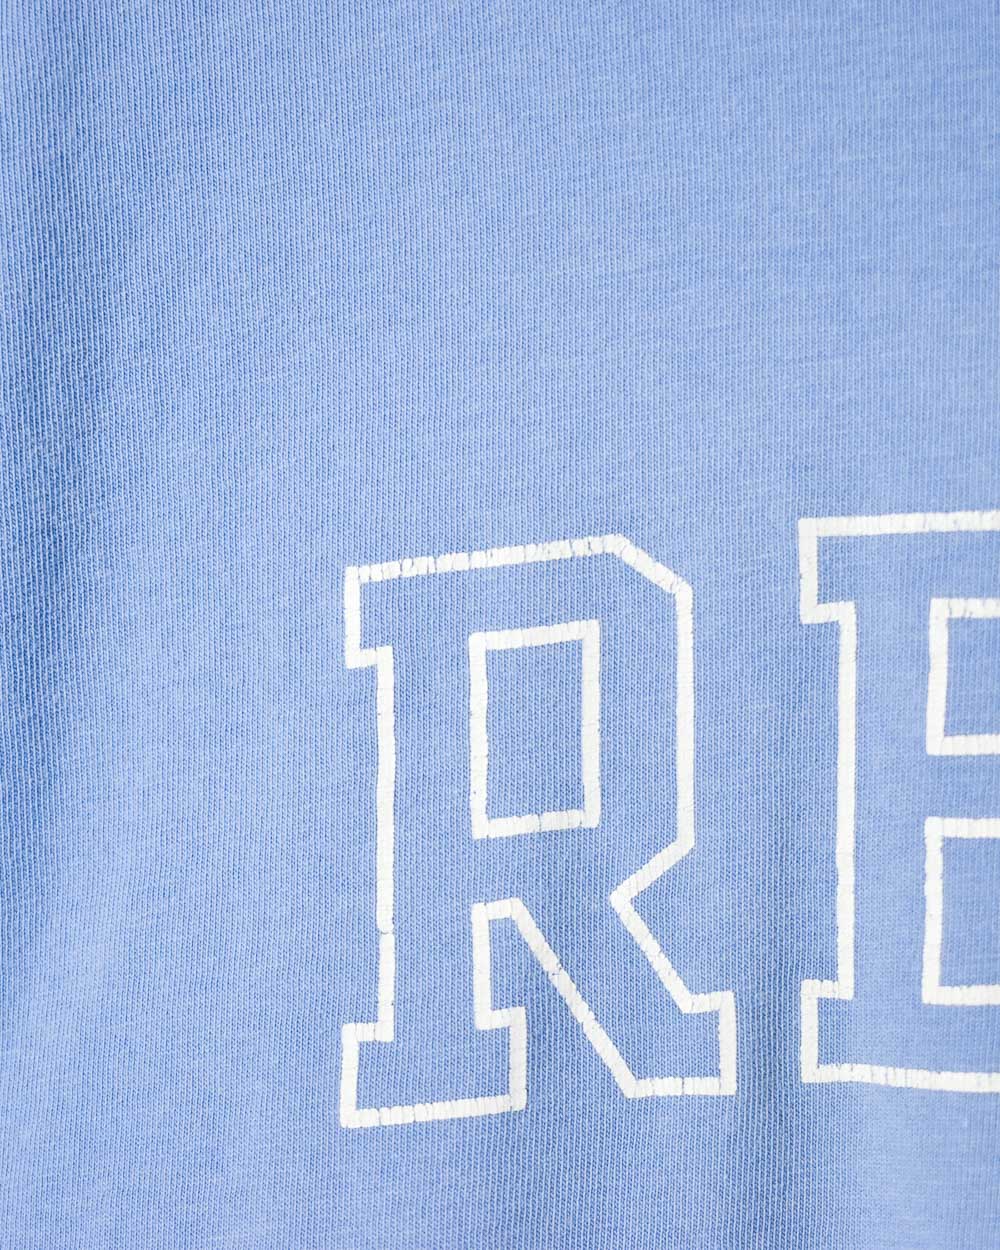 BabyBlue Reebok T-Shirt - XX-Large